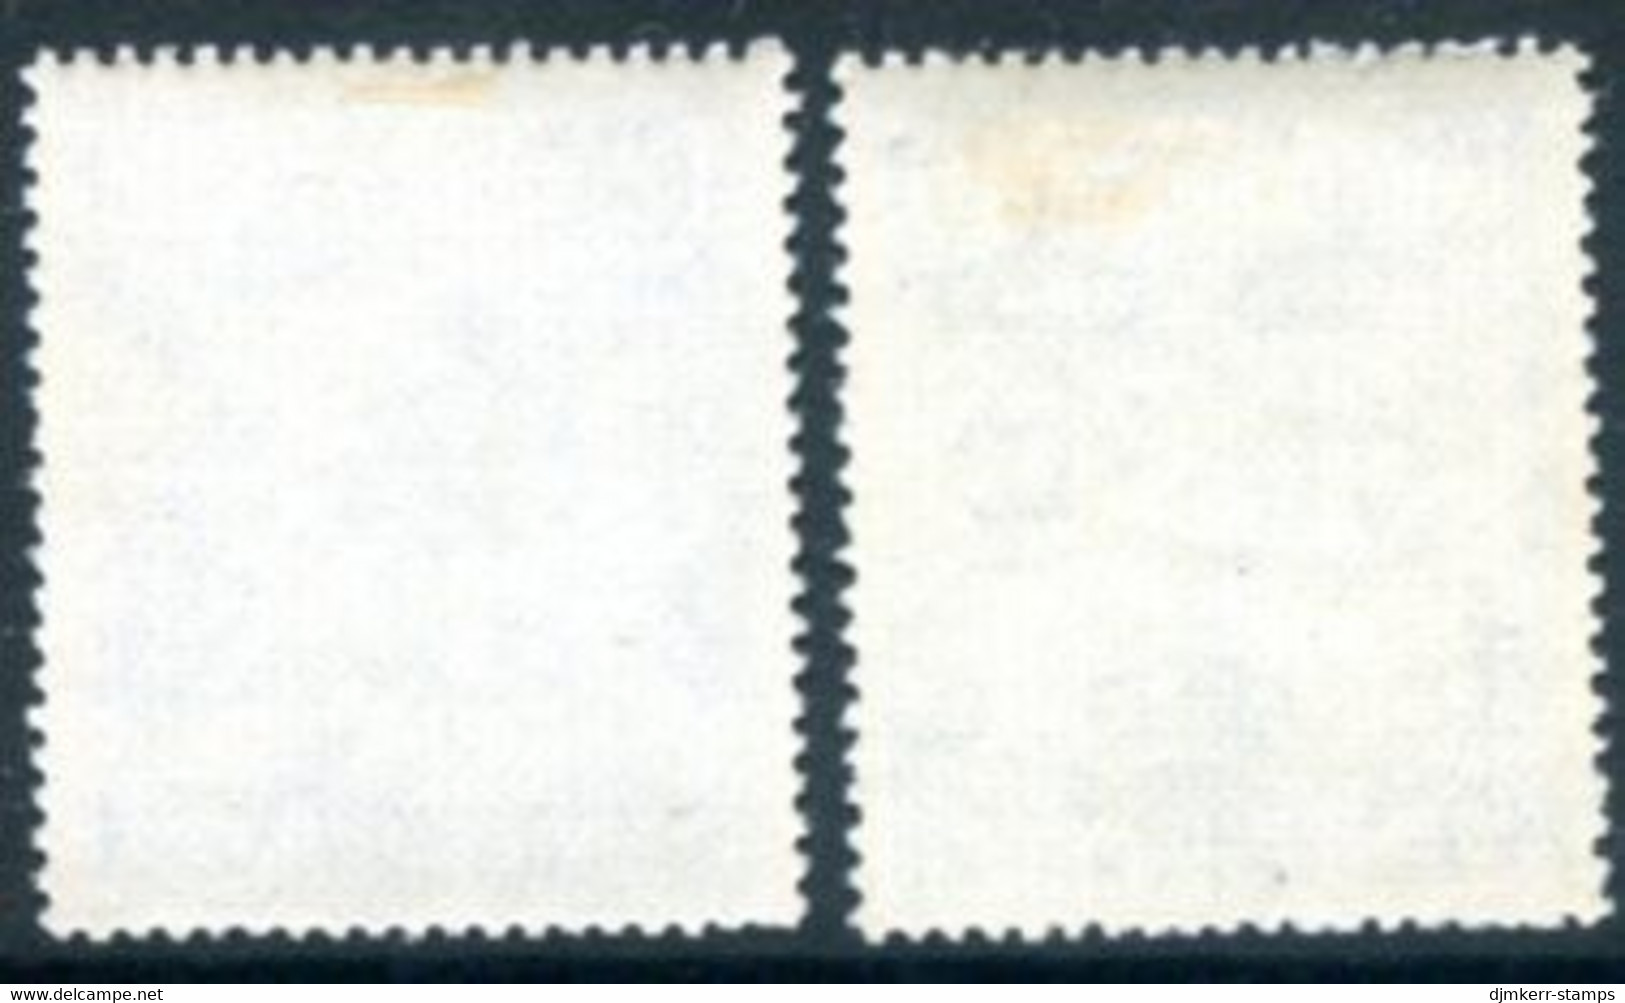 ROMANIA 1940 Balkan Entente MNH / **  Michel 615-16 - Unused Stamps